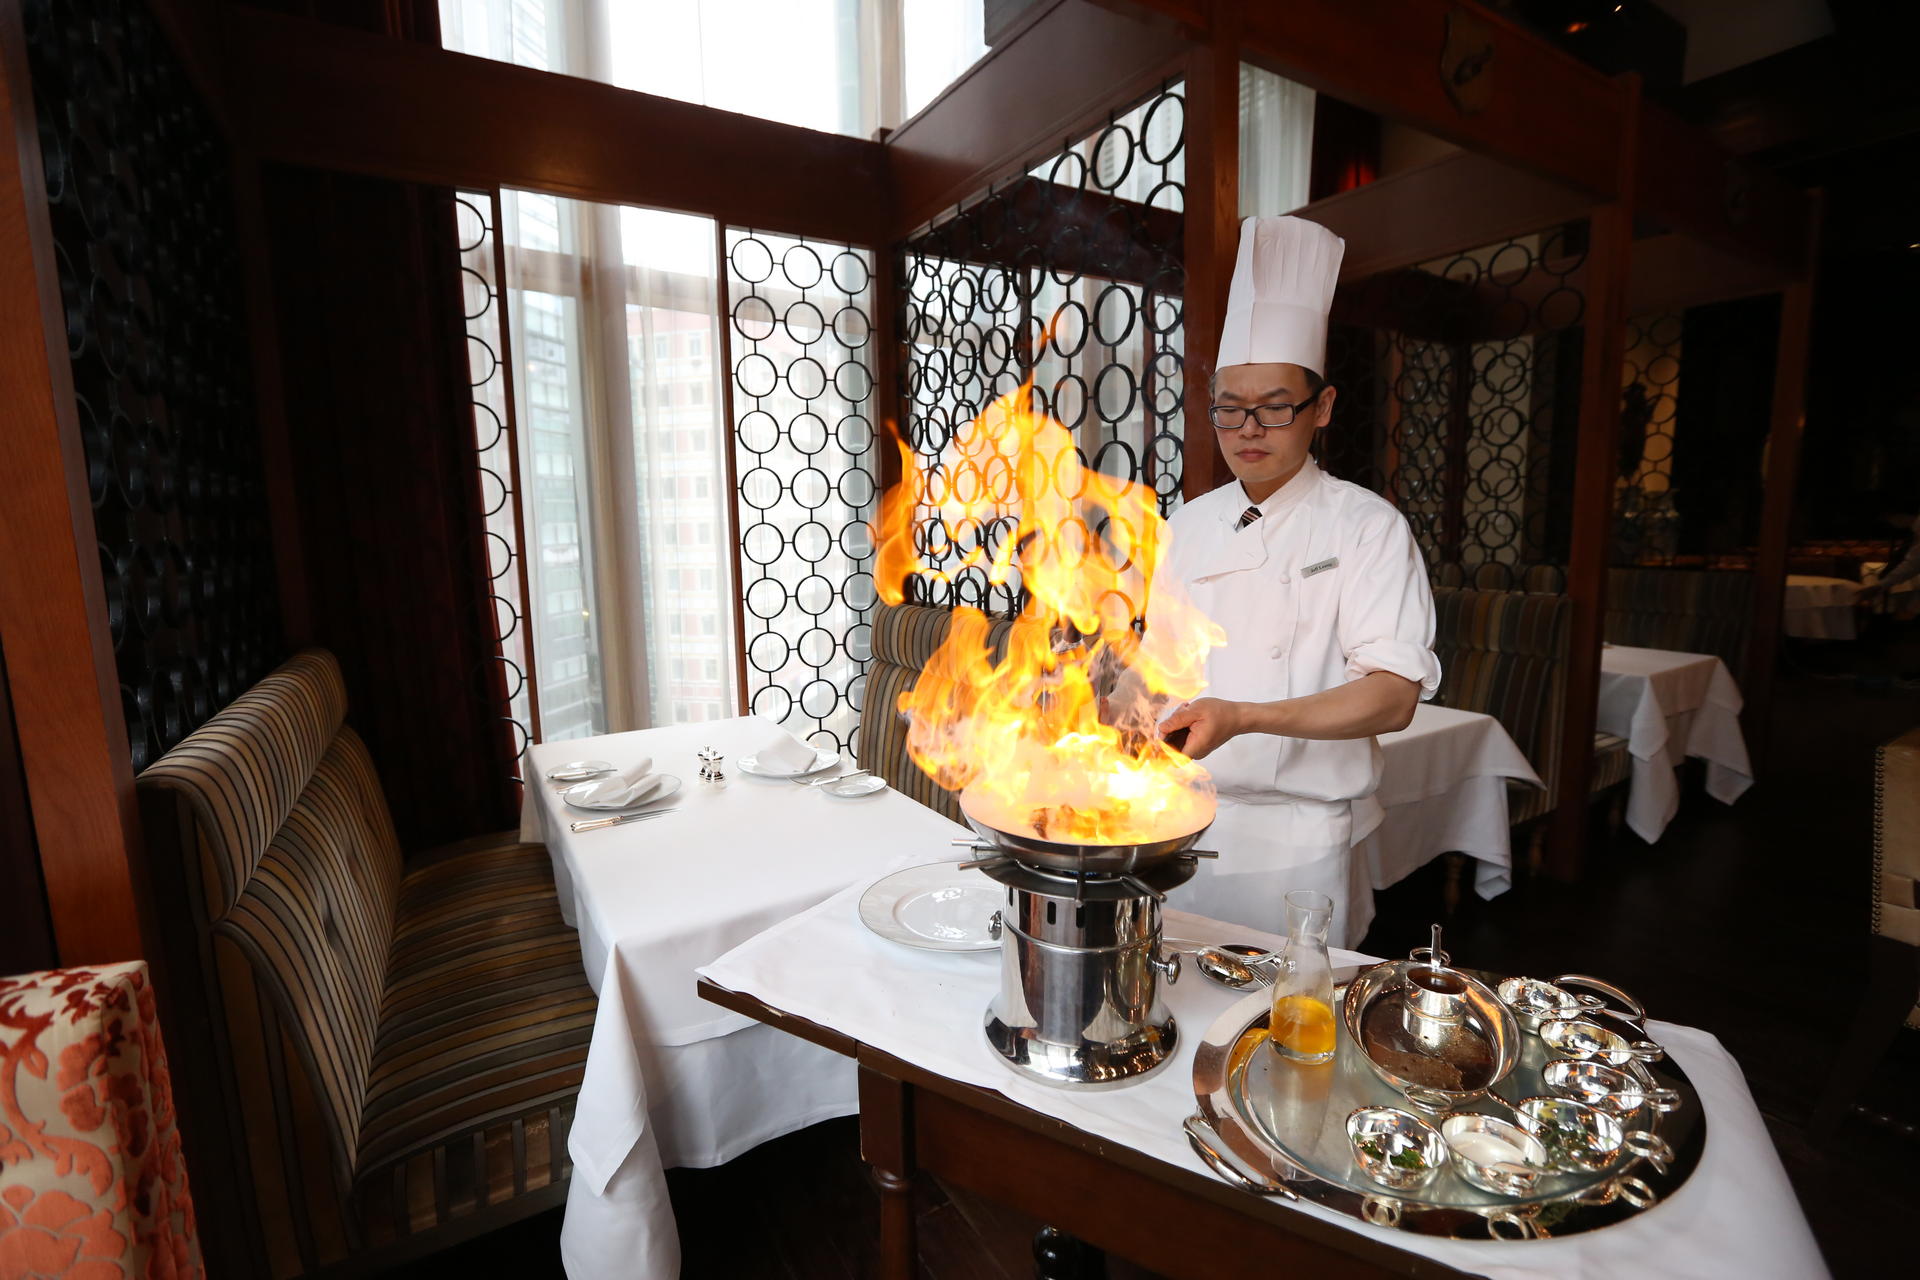 Sous chef Jeff Leung  flambées at the table. Photos: Nora Tam, SCMP